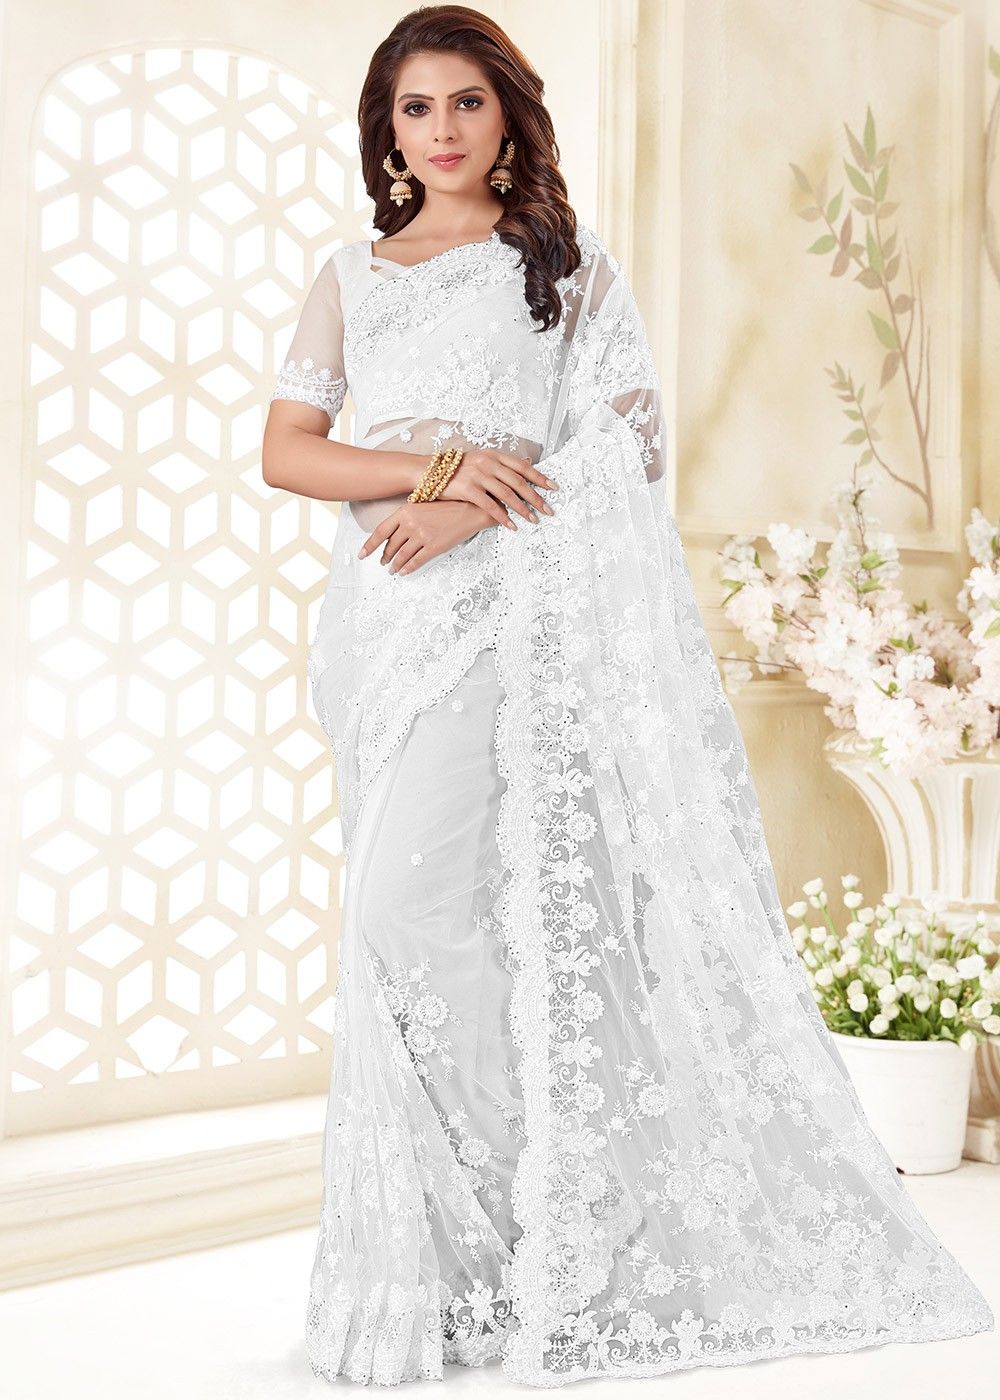 Share more than 80 white saree pics latest